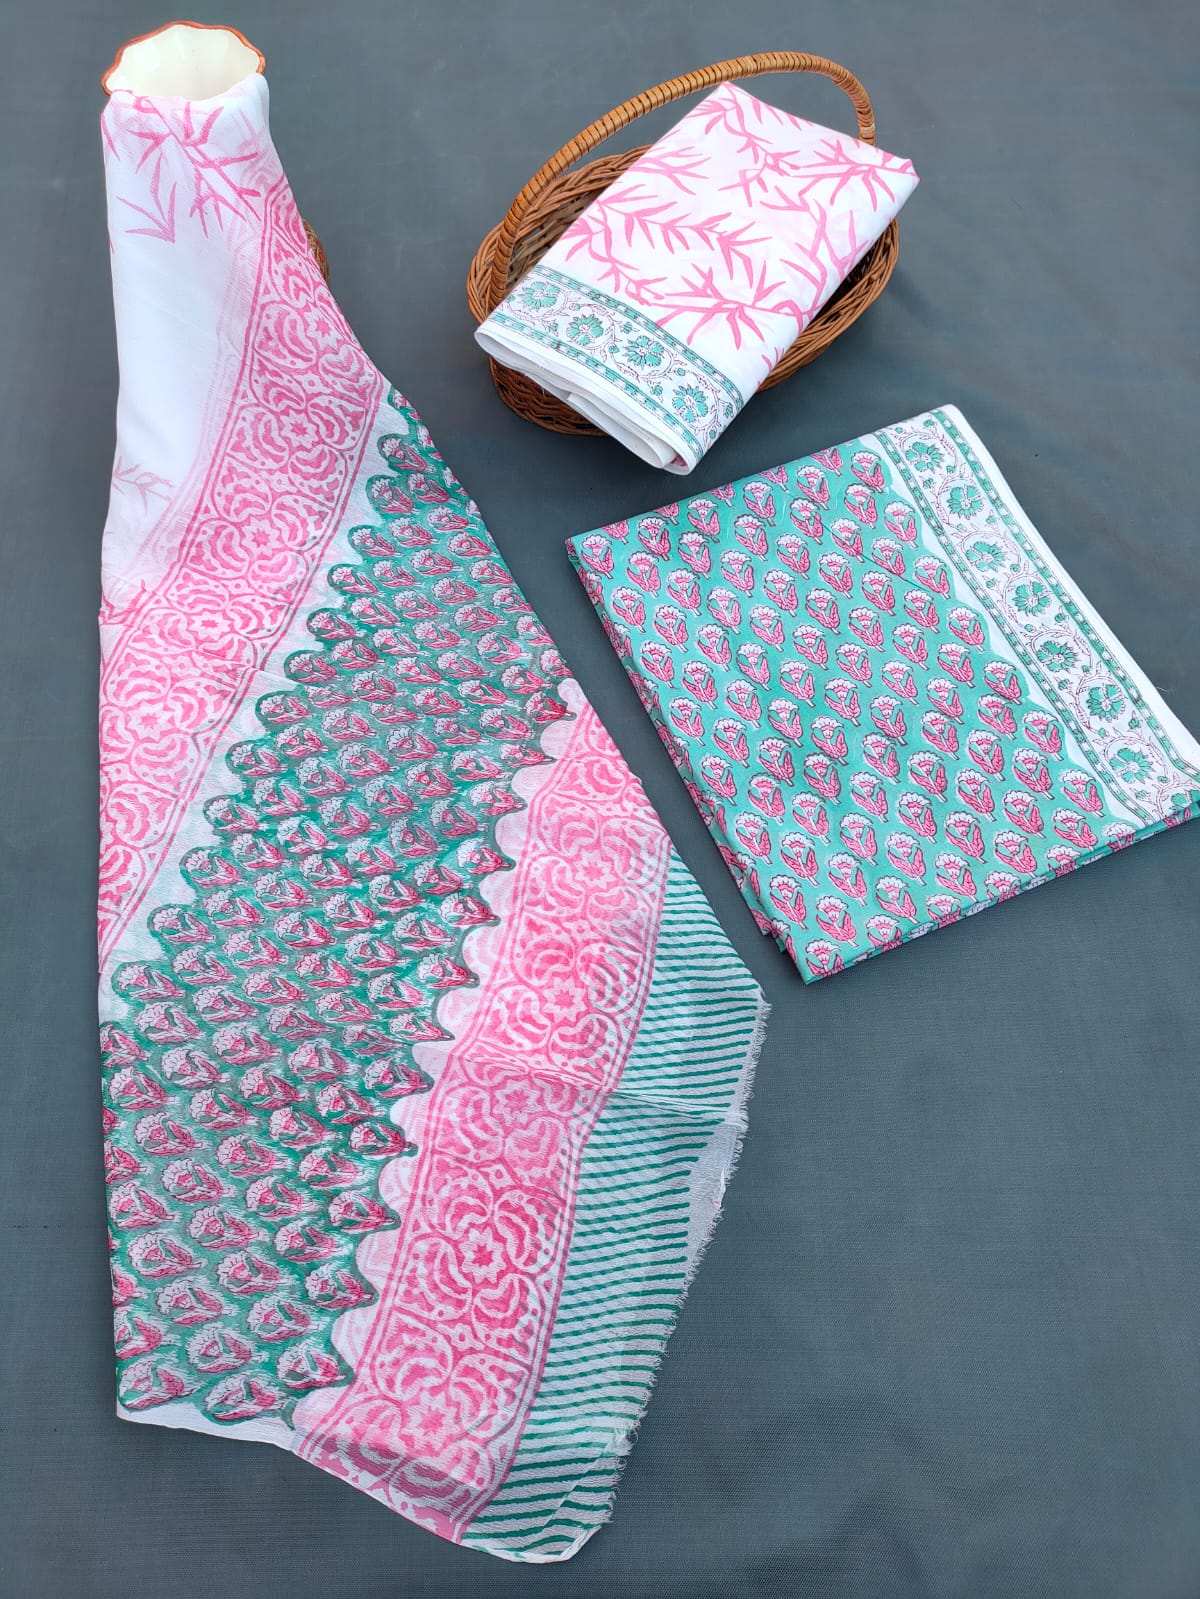 Jaipuri Unstitched Dress Material Hand Block Printed Cotton Suit With Chiffon Dupatta - JB669